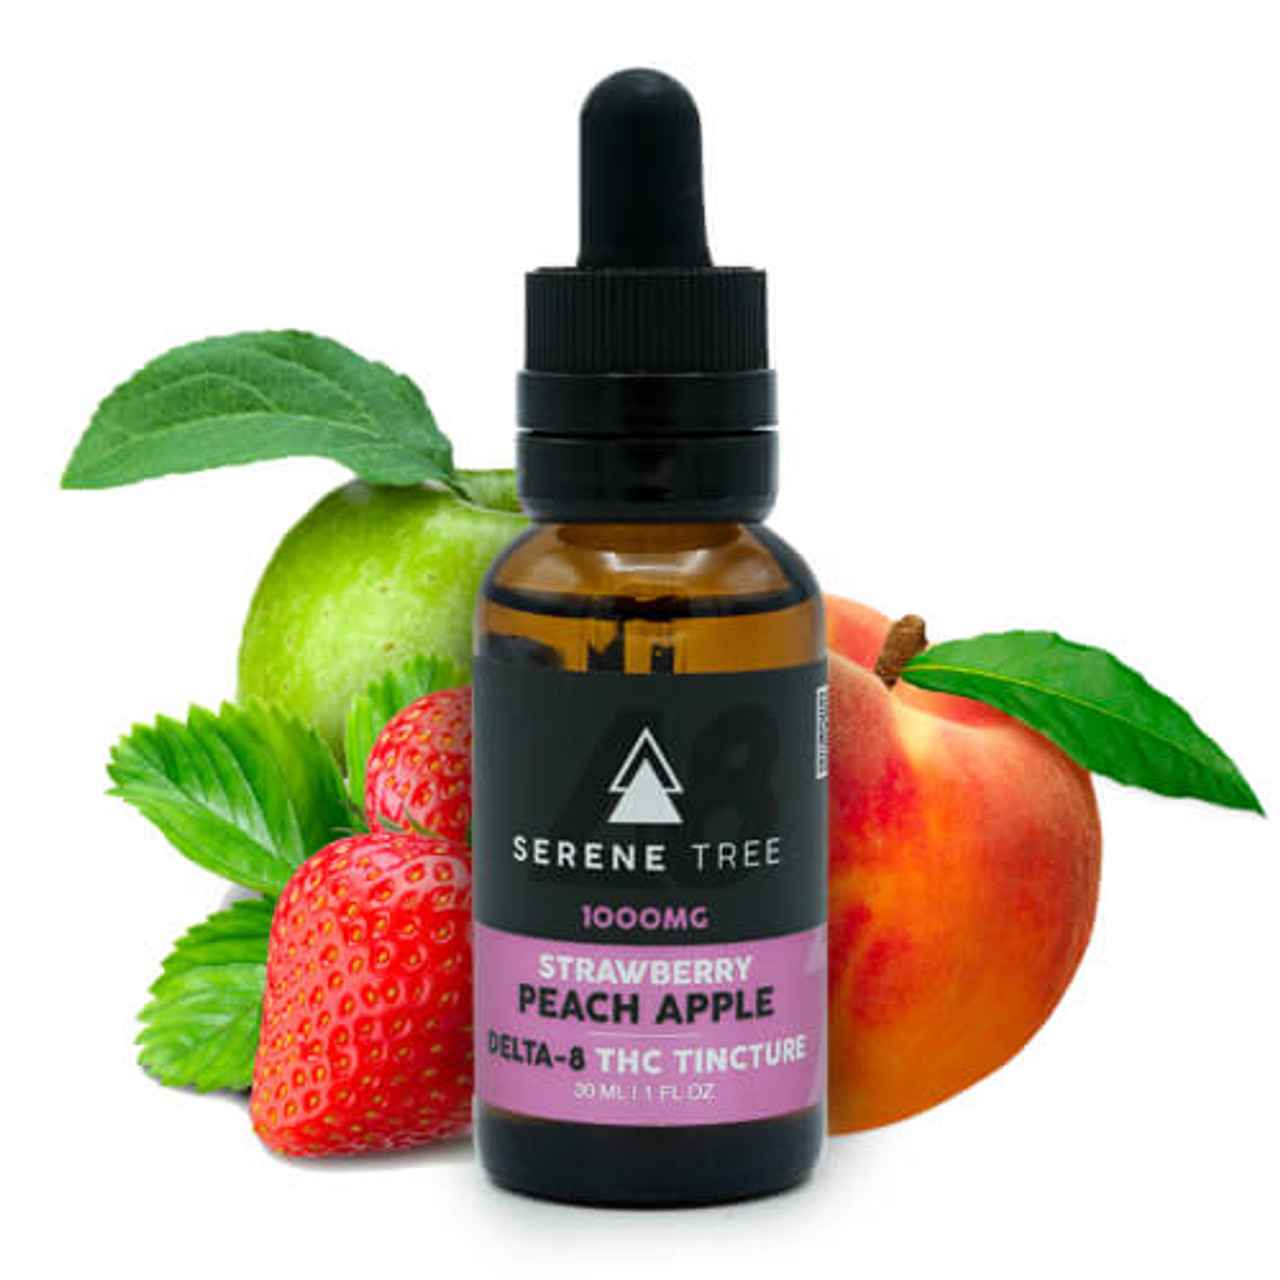 Serene Tree Delta-8 THC | 1000MG THC Tincture | Strawberry Peach Apple